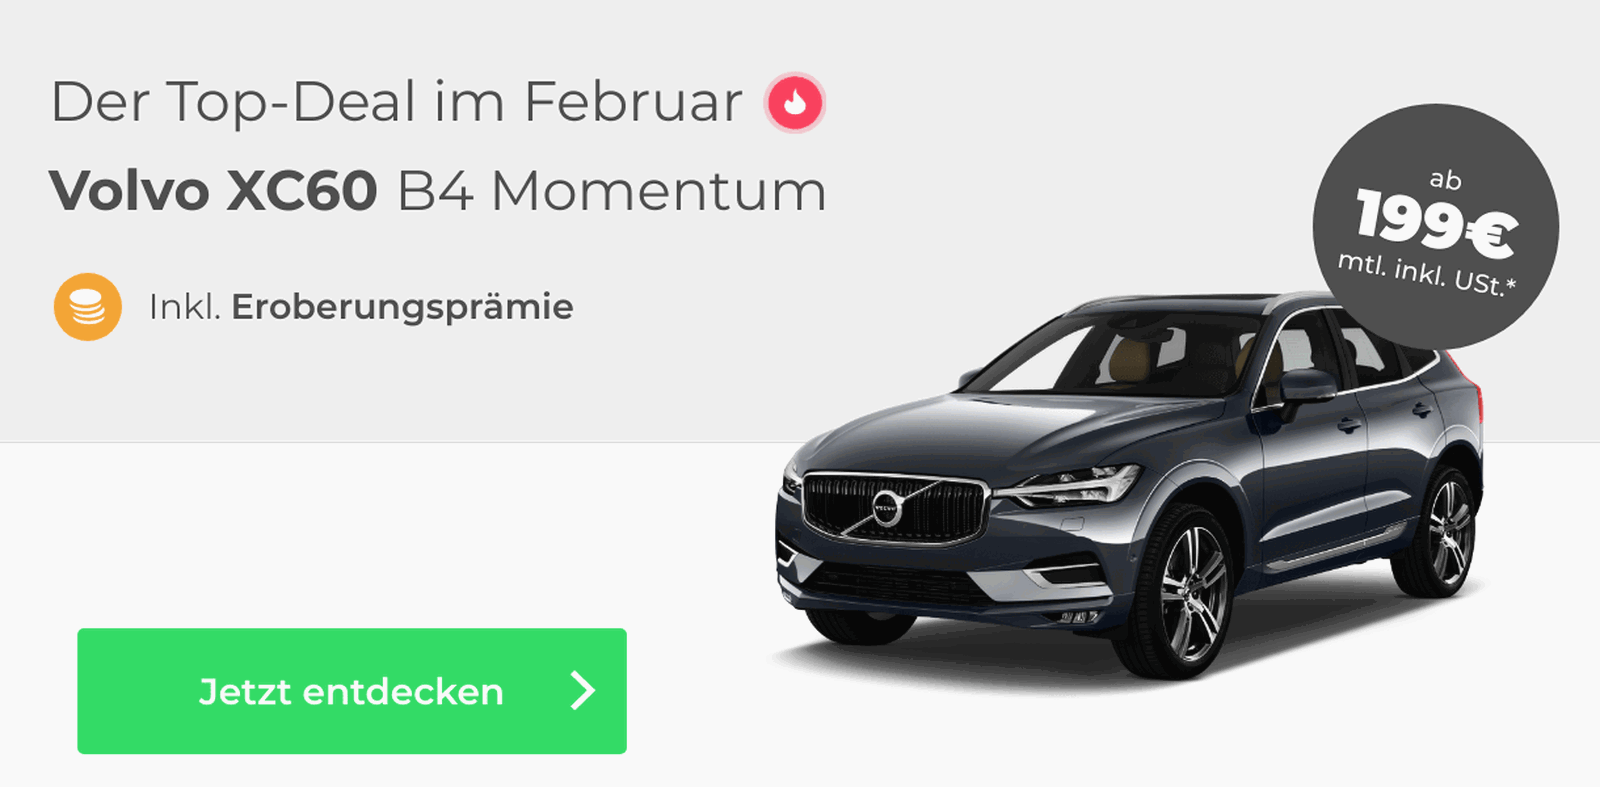 Vehiculum Leads: Ab 199€*: Volvo XC60 B4 Momentum 🚗